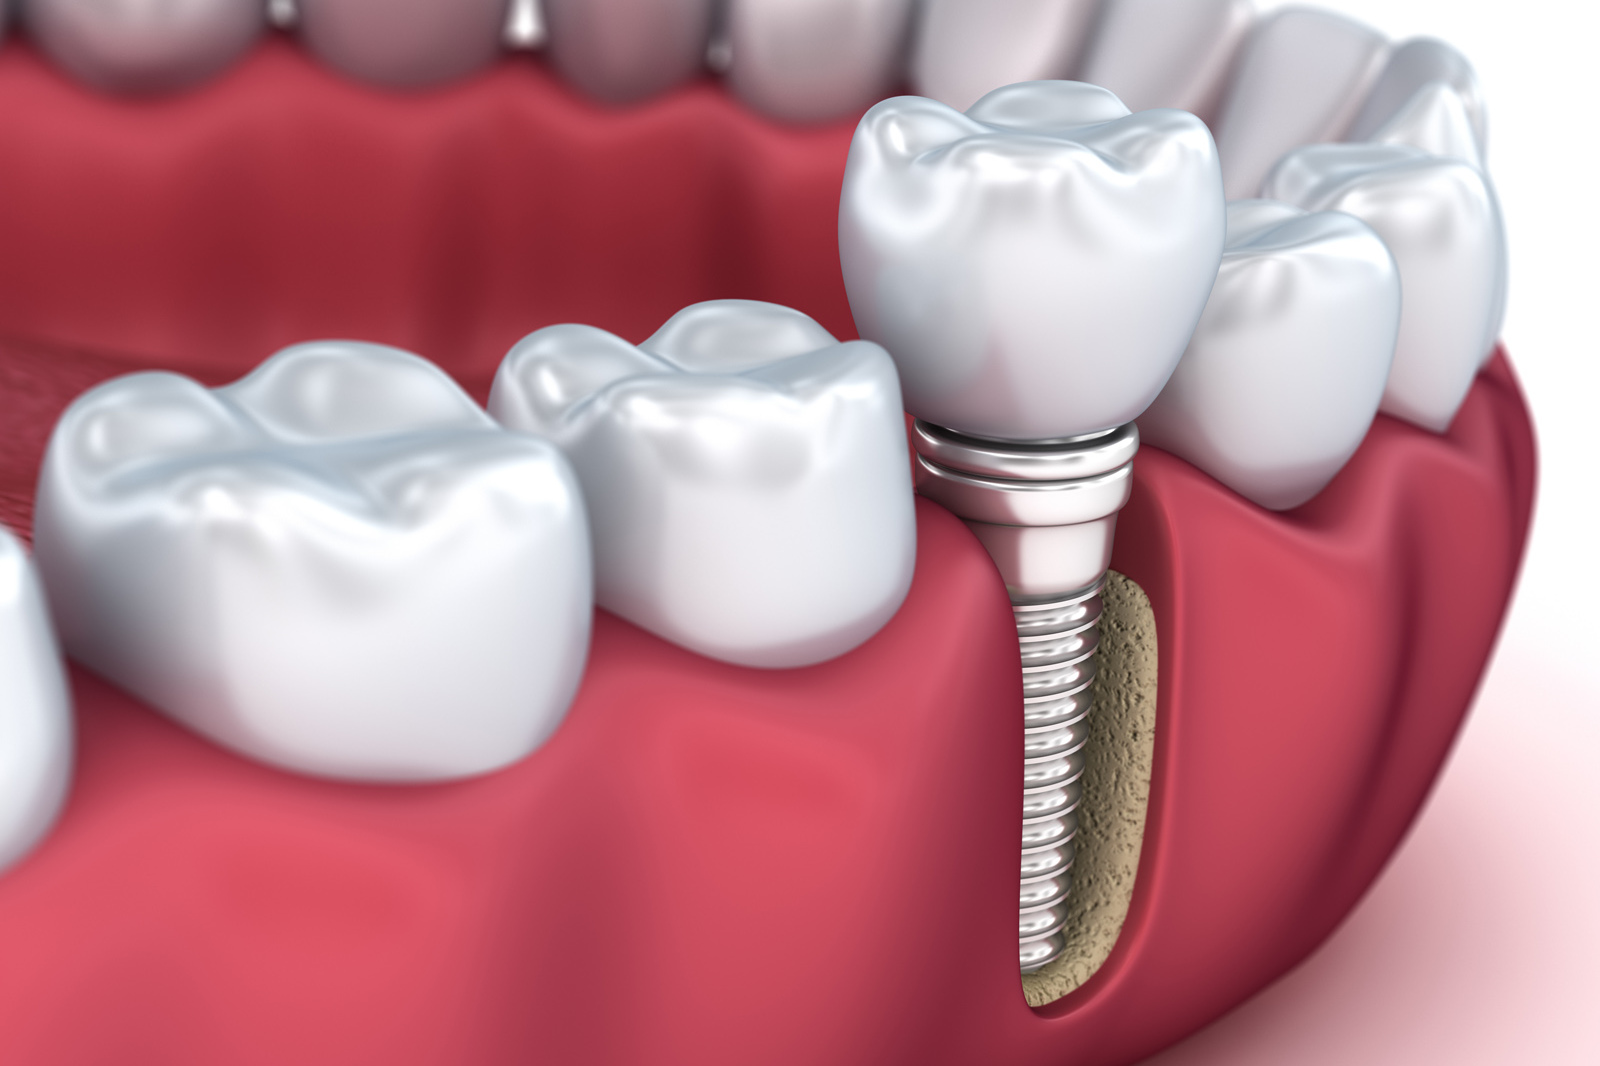 Dental Implants - Procedure, Advantages and Cost 